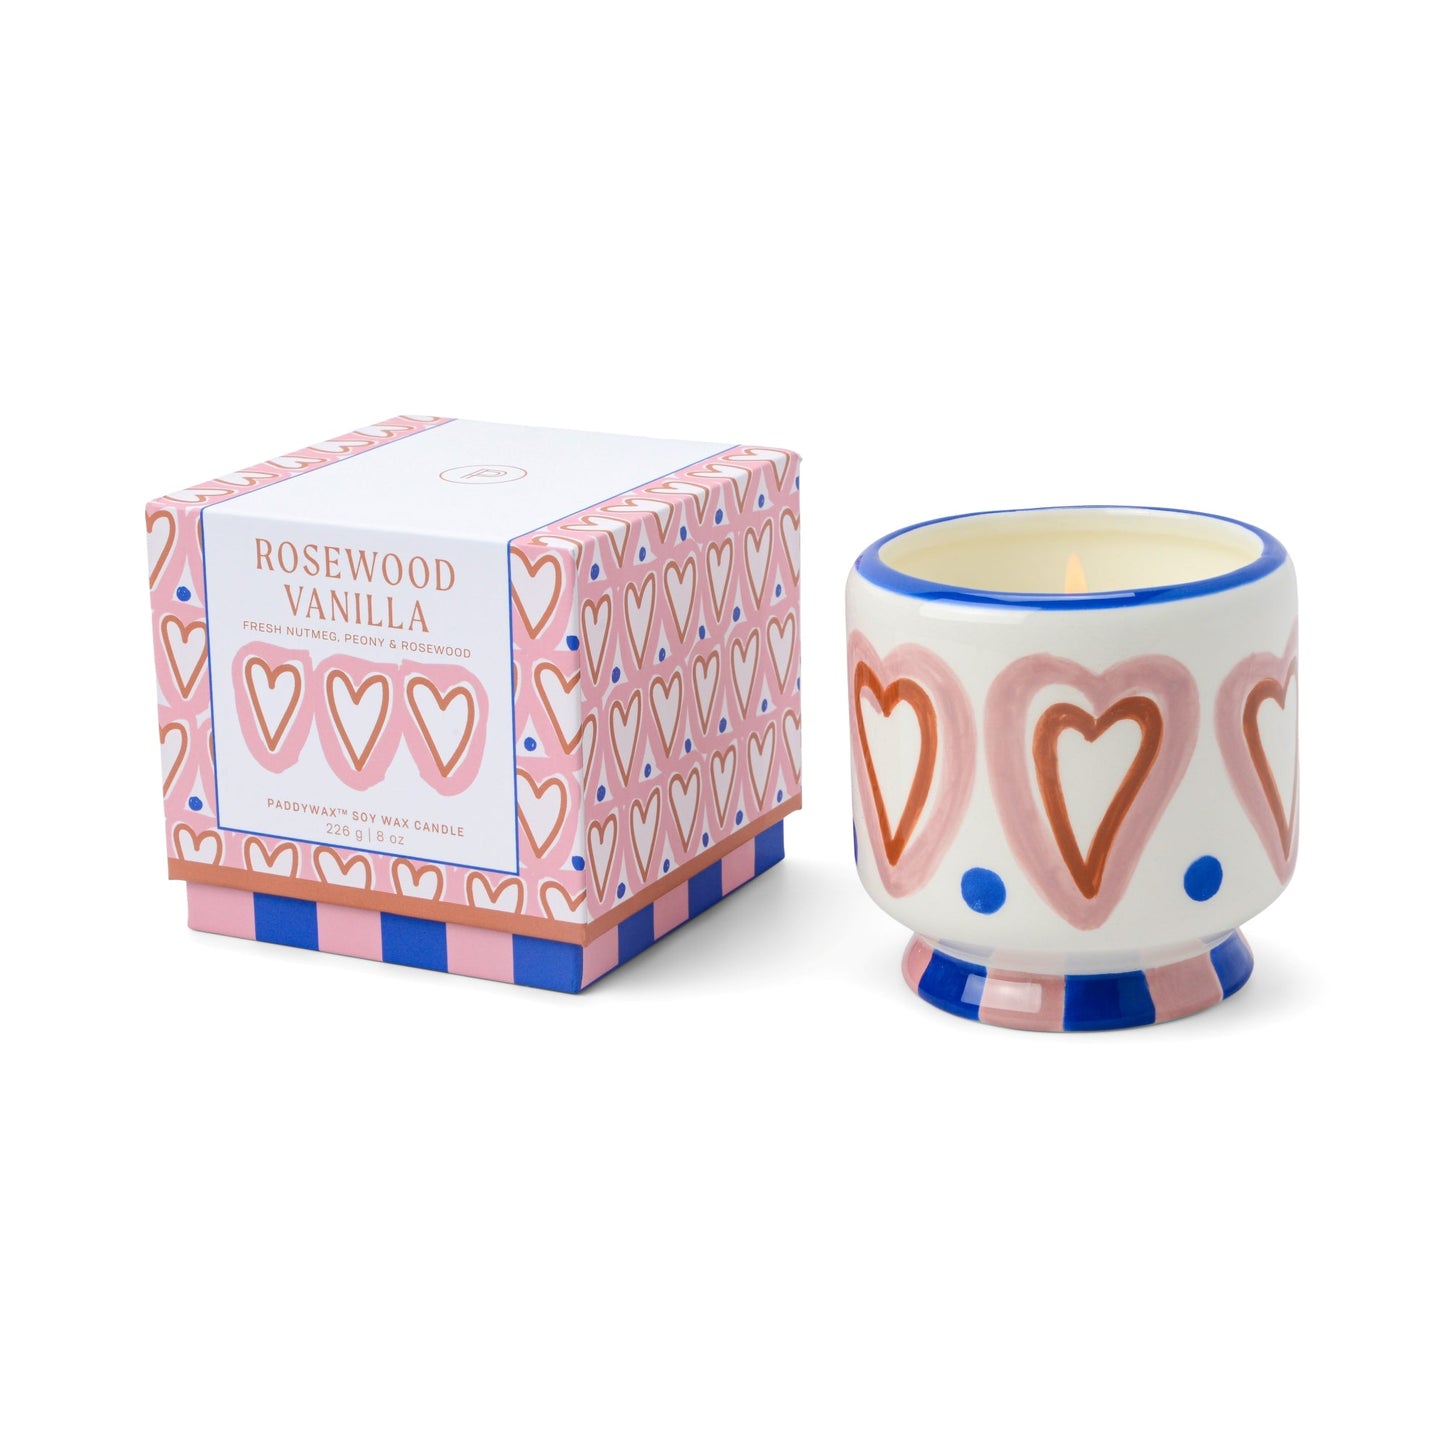 Adopo 8 oz./226g Hearts Ceramic Candle - Rosewood Vanilla